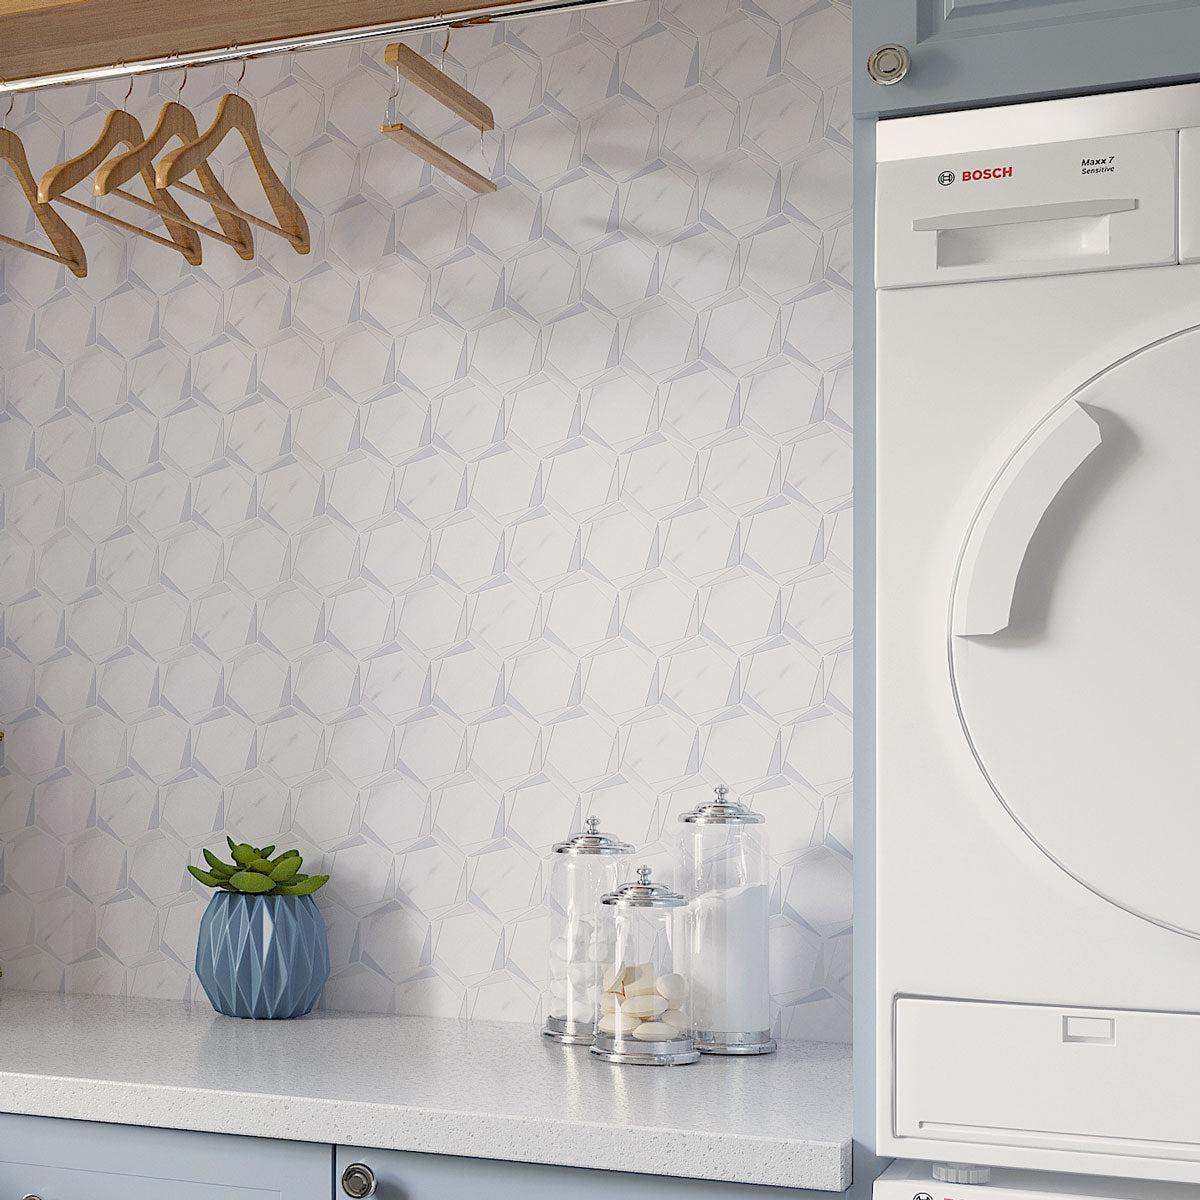 Geometric Hexagon Tile Laundry Room Backsplash